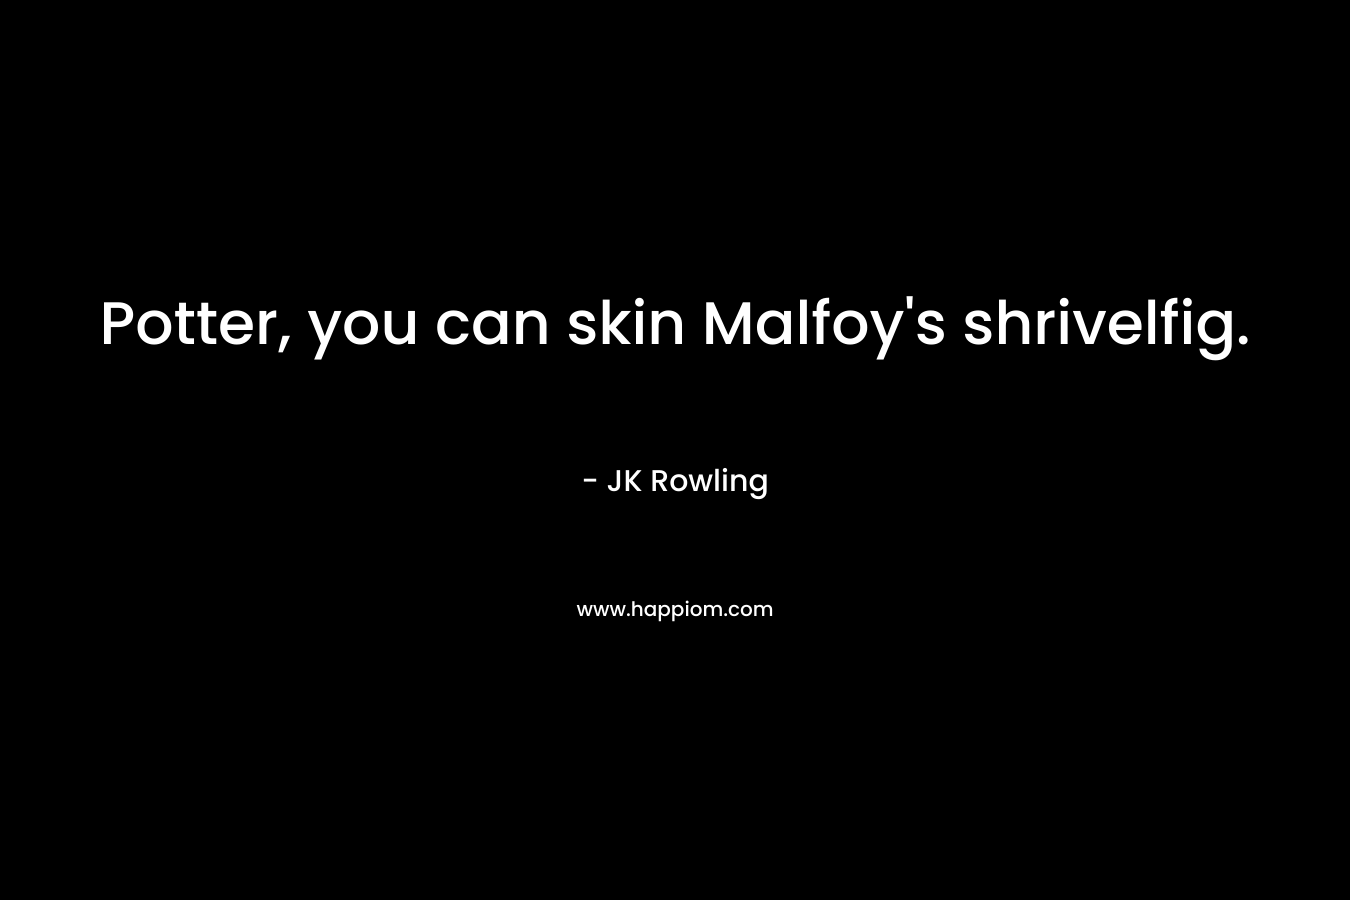 Potter, you can skin Malfoy's shrivelfig.